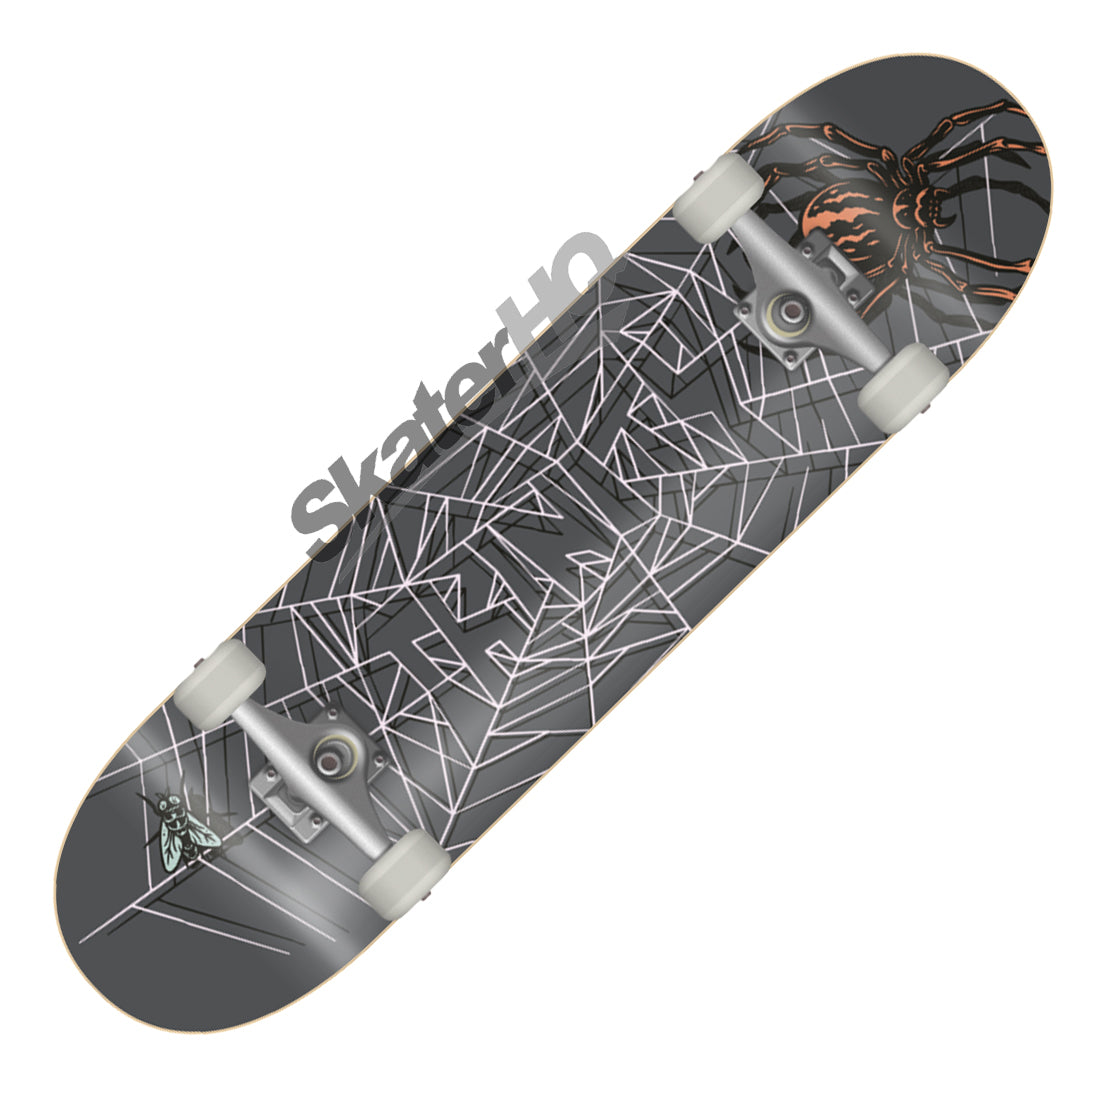 Trinity Web Slinger 7.75 Complete Skateboard Completes Modern Street